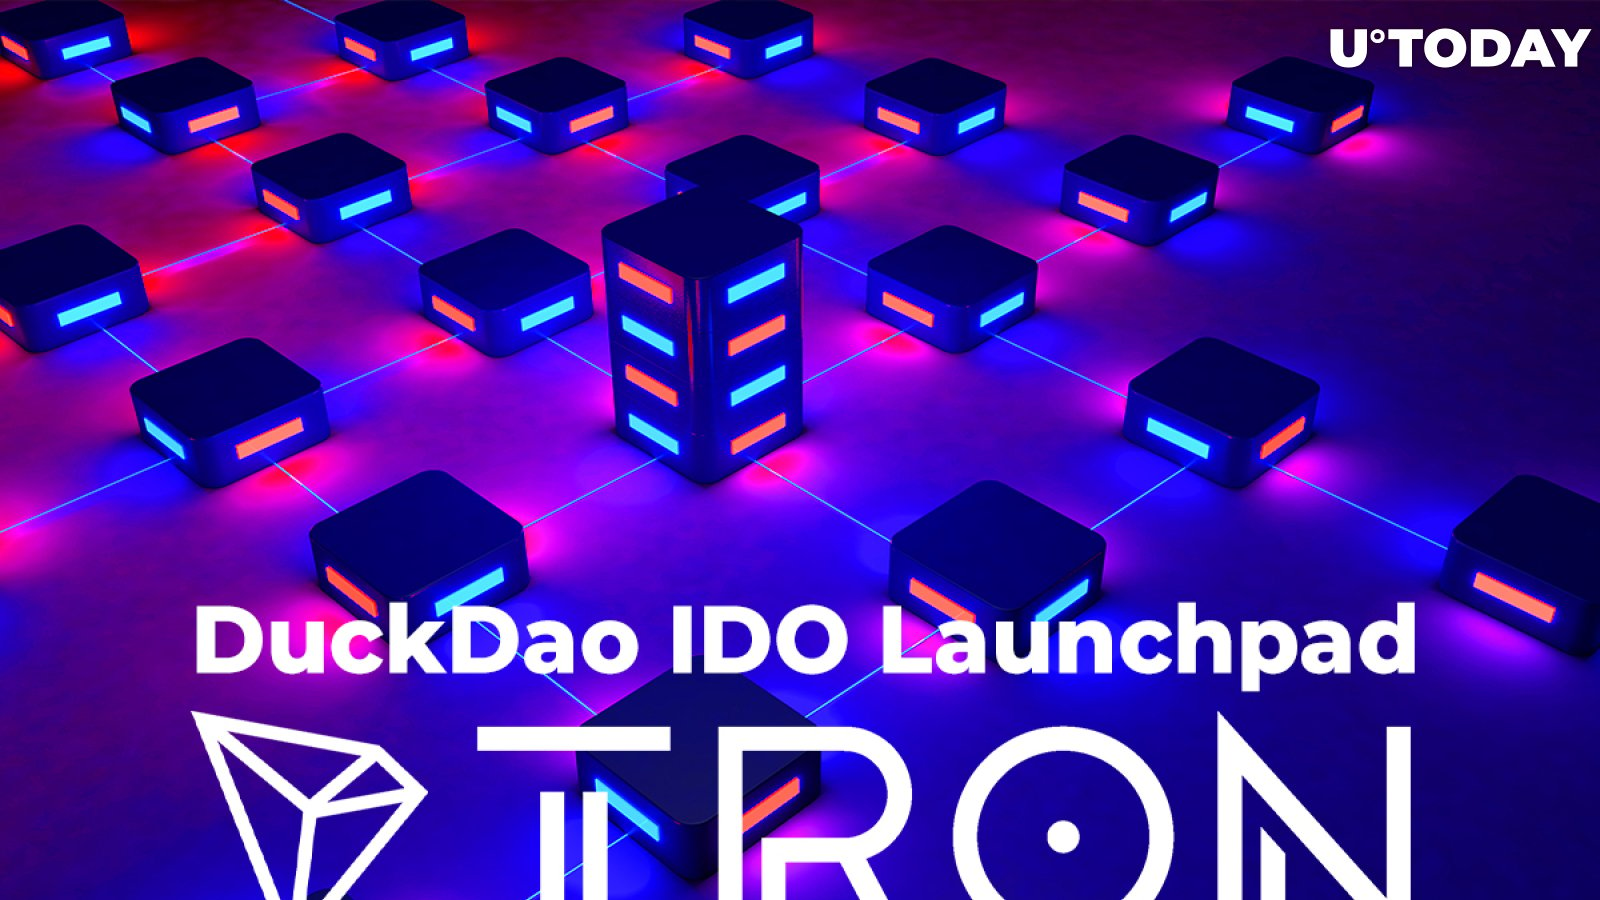 Tron Blockchain (TRX) Inked Crucial Partnership With DuckDAO IDO Launchpad